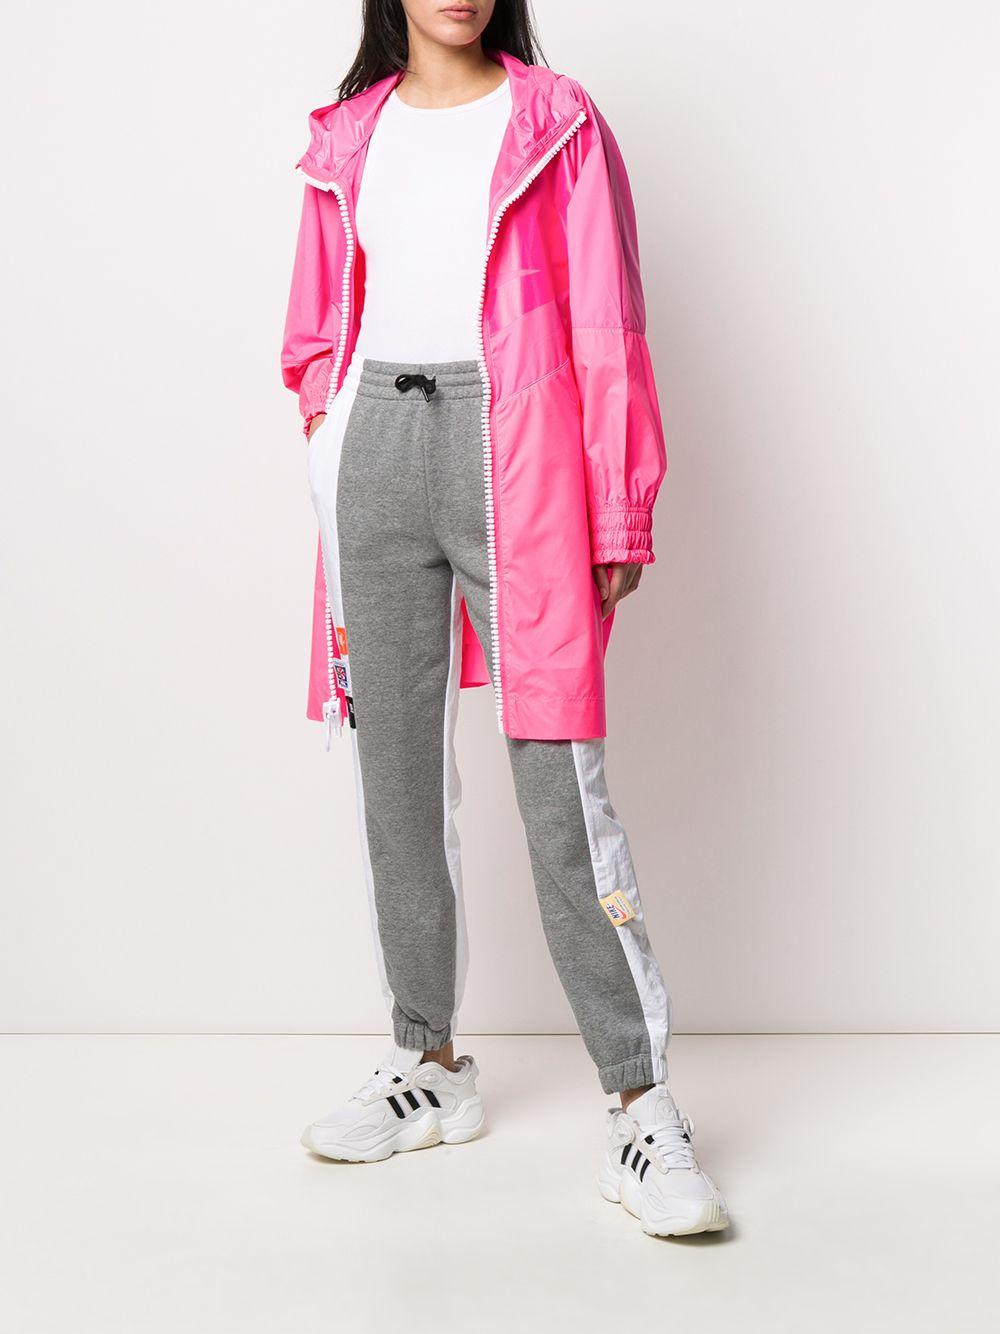 Nike Oversized Hooded Rain Coat in Pink | Lyst